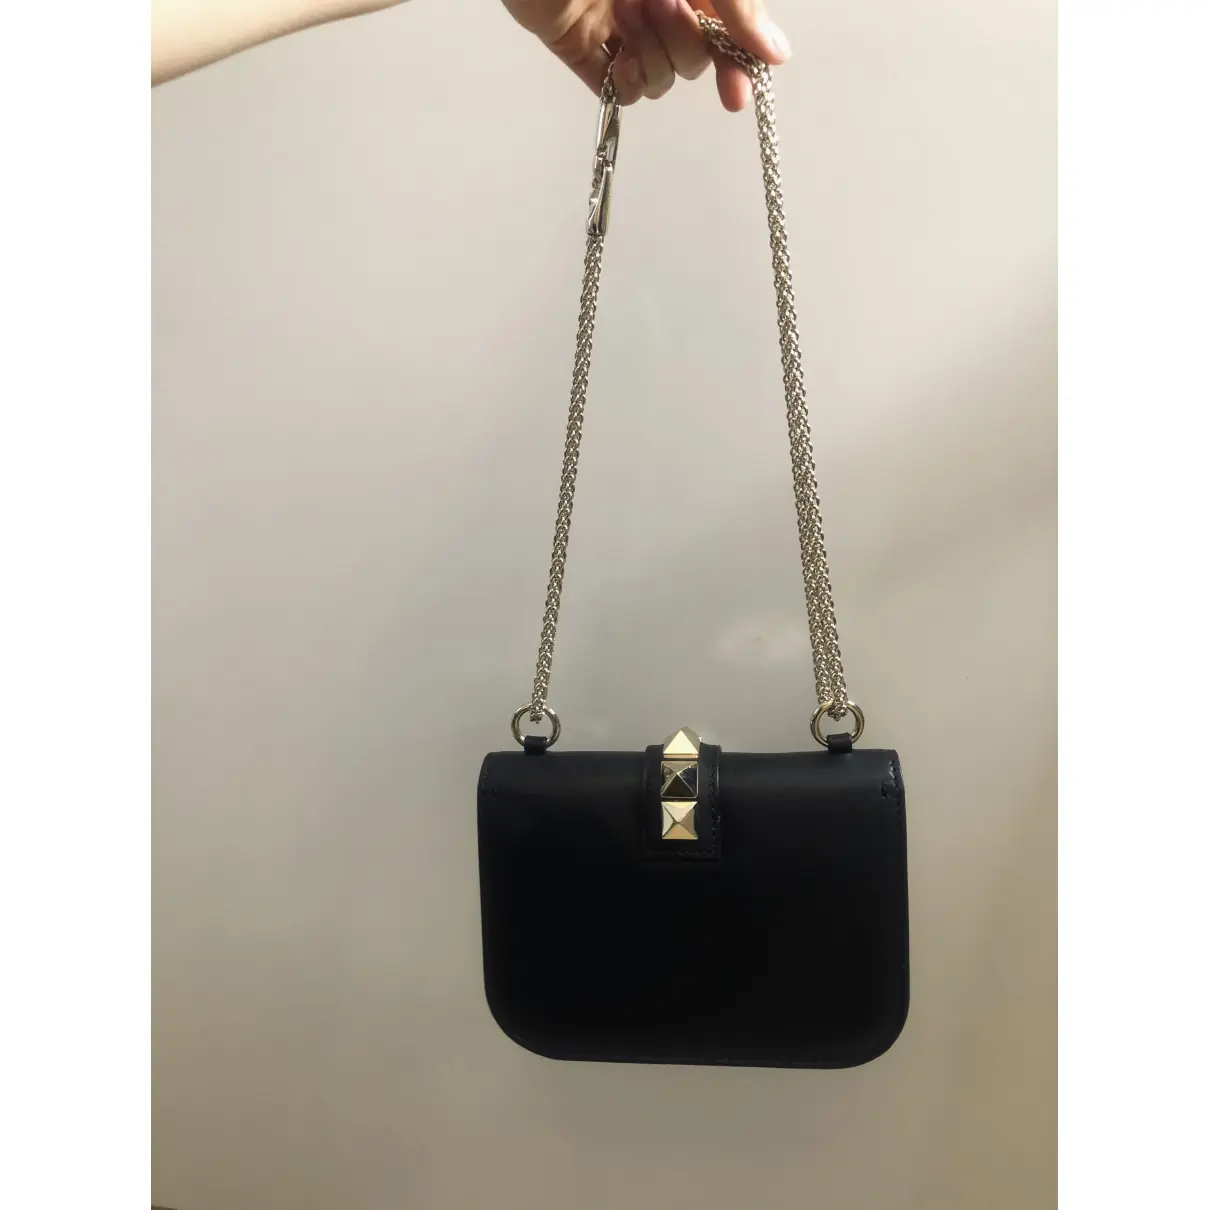 Buy Valentino Garavani Rockstud leather handbag online